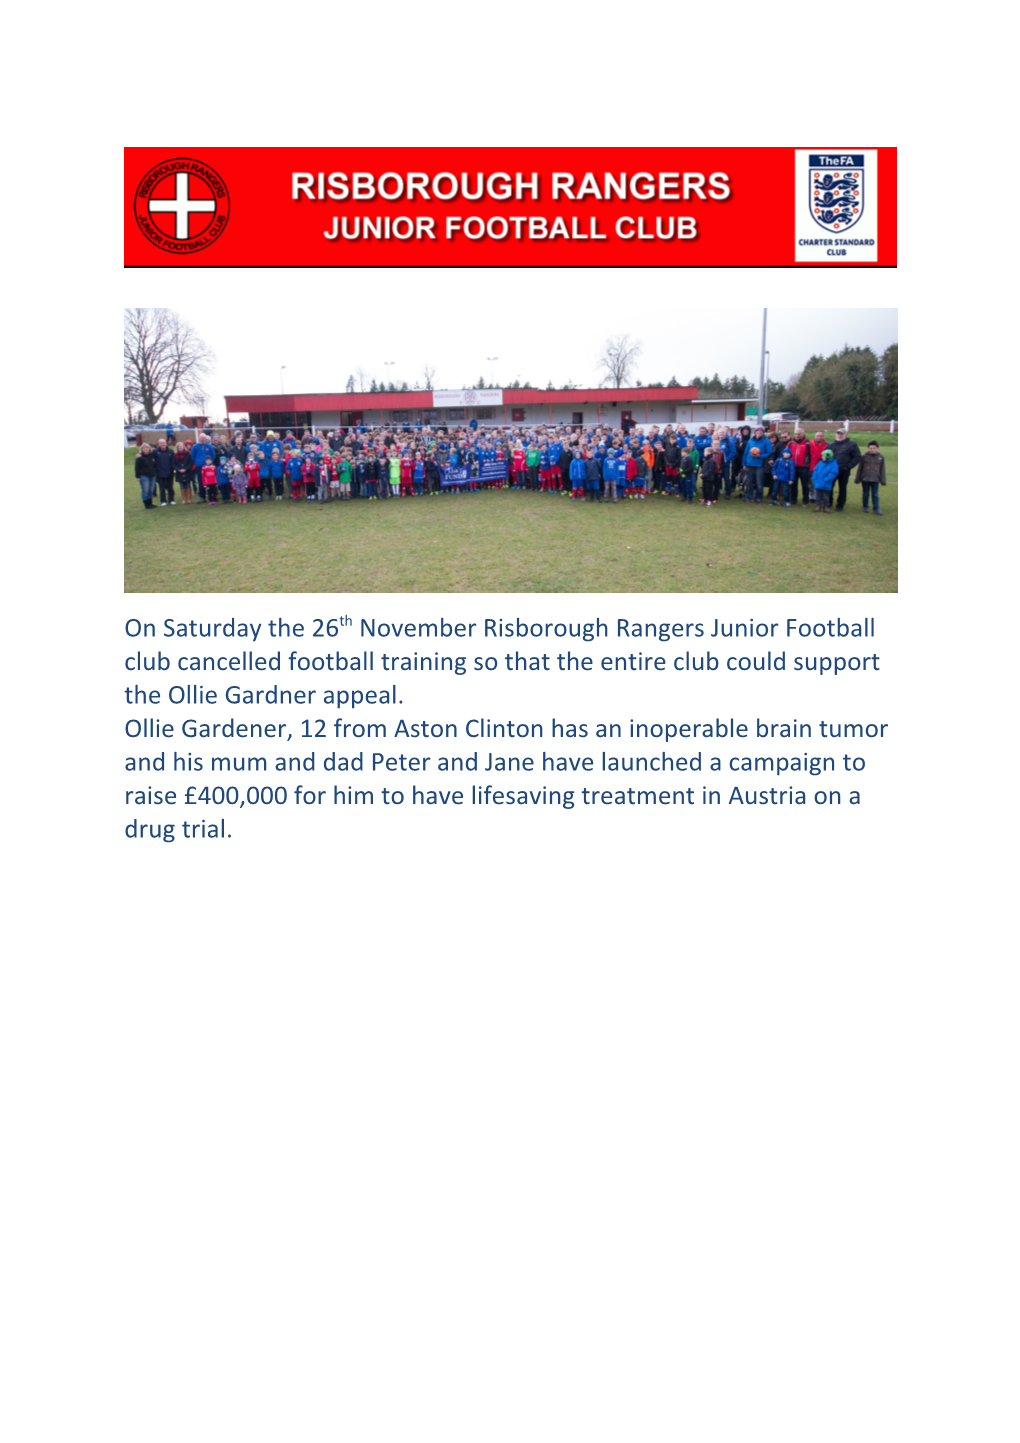 On Saturday the 26Th November Risborough Rangers Junior Football Club Cancelled Football